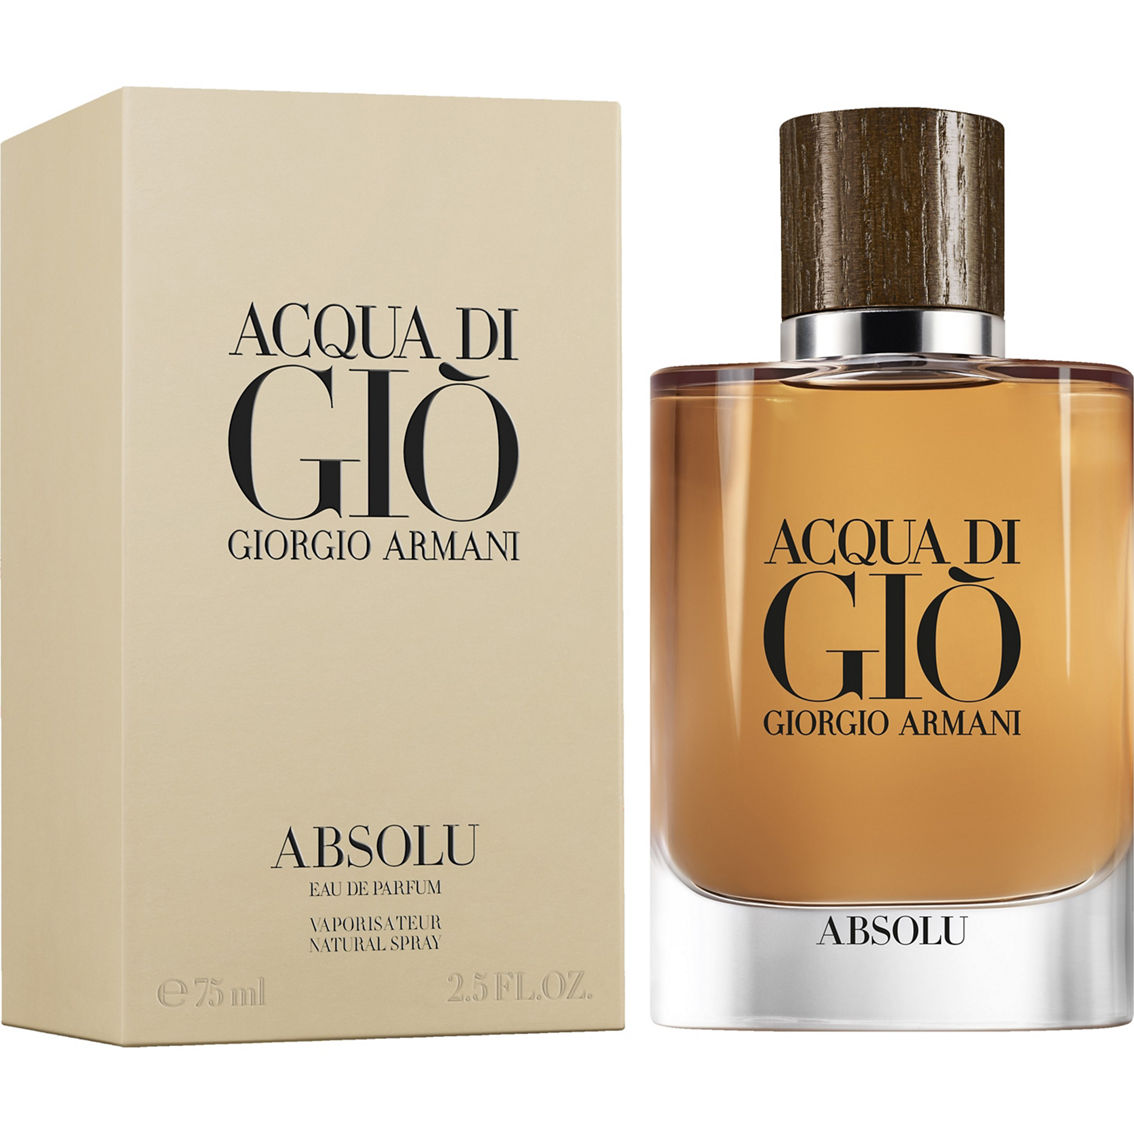 Giorgio Armani Acqua Di Gio Absolu Eau de Parfum - Image 2 of 3